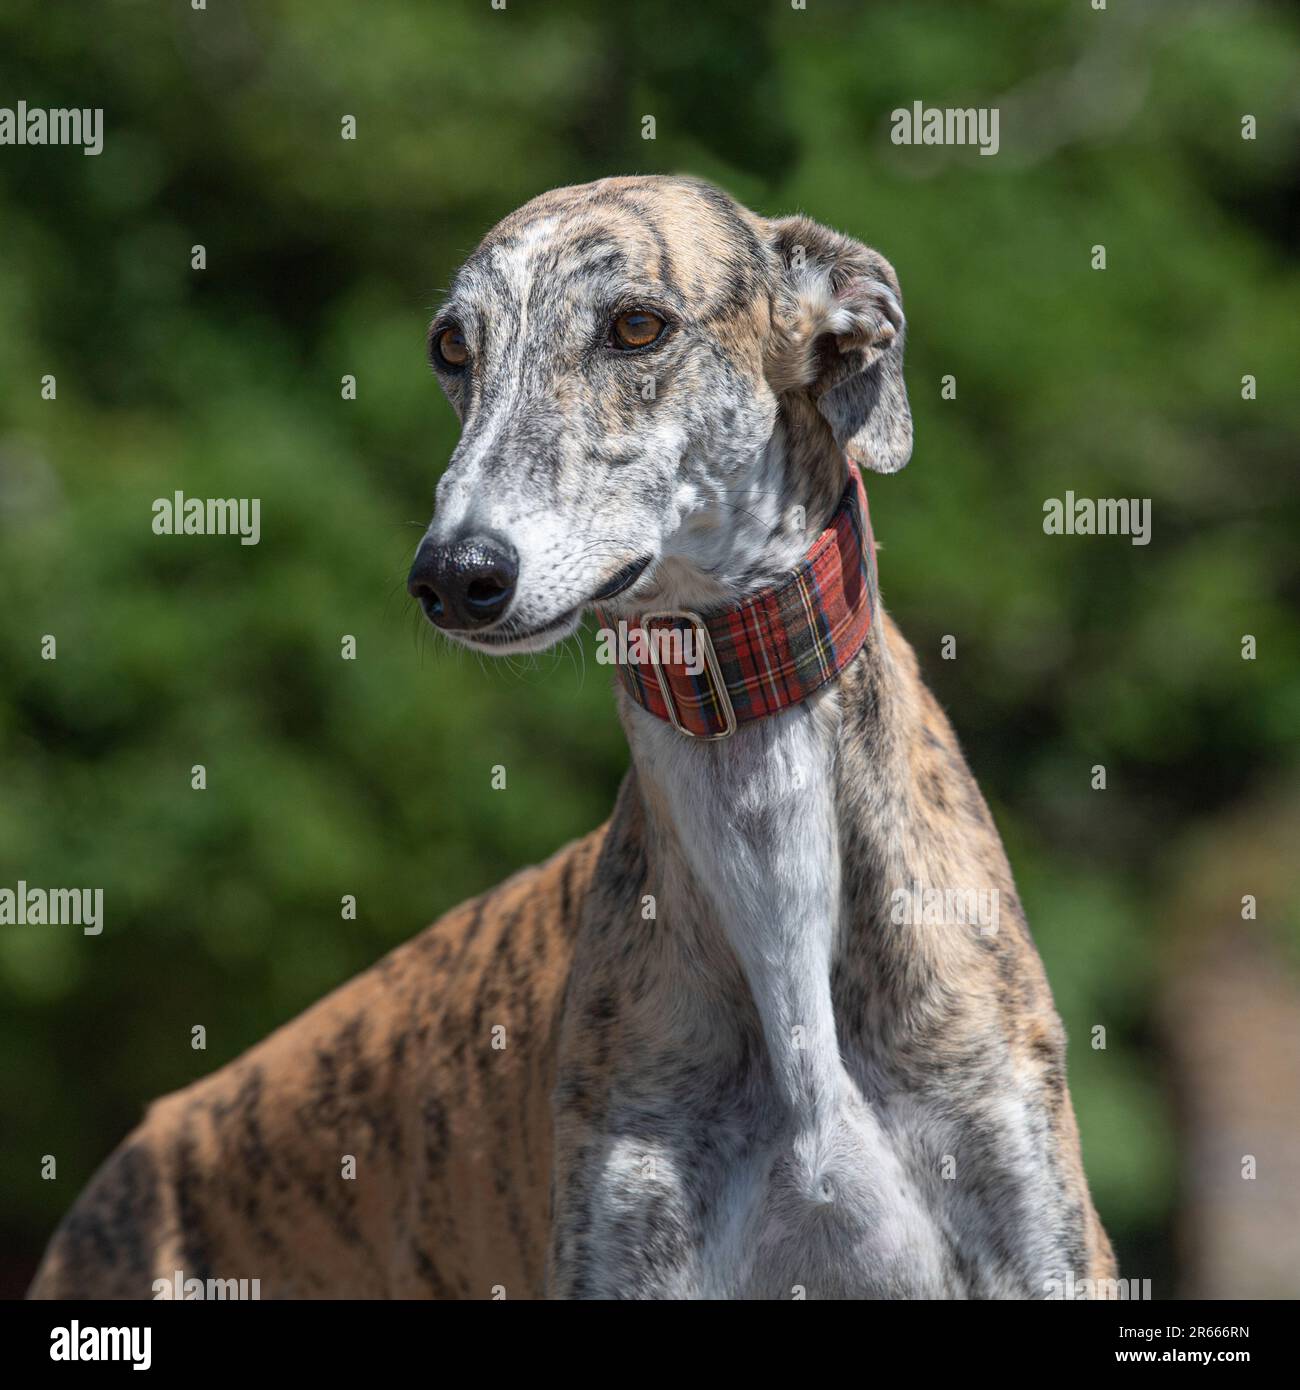 Spanish Galgo rescue dog Stock Photo - Alamy